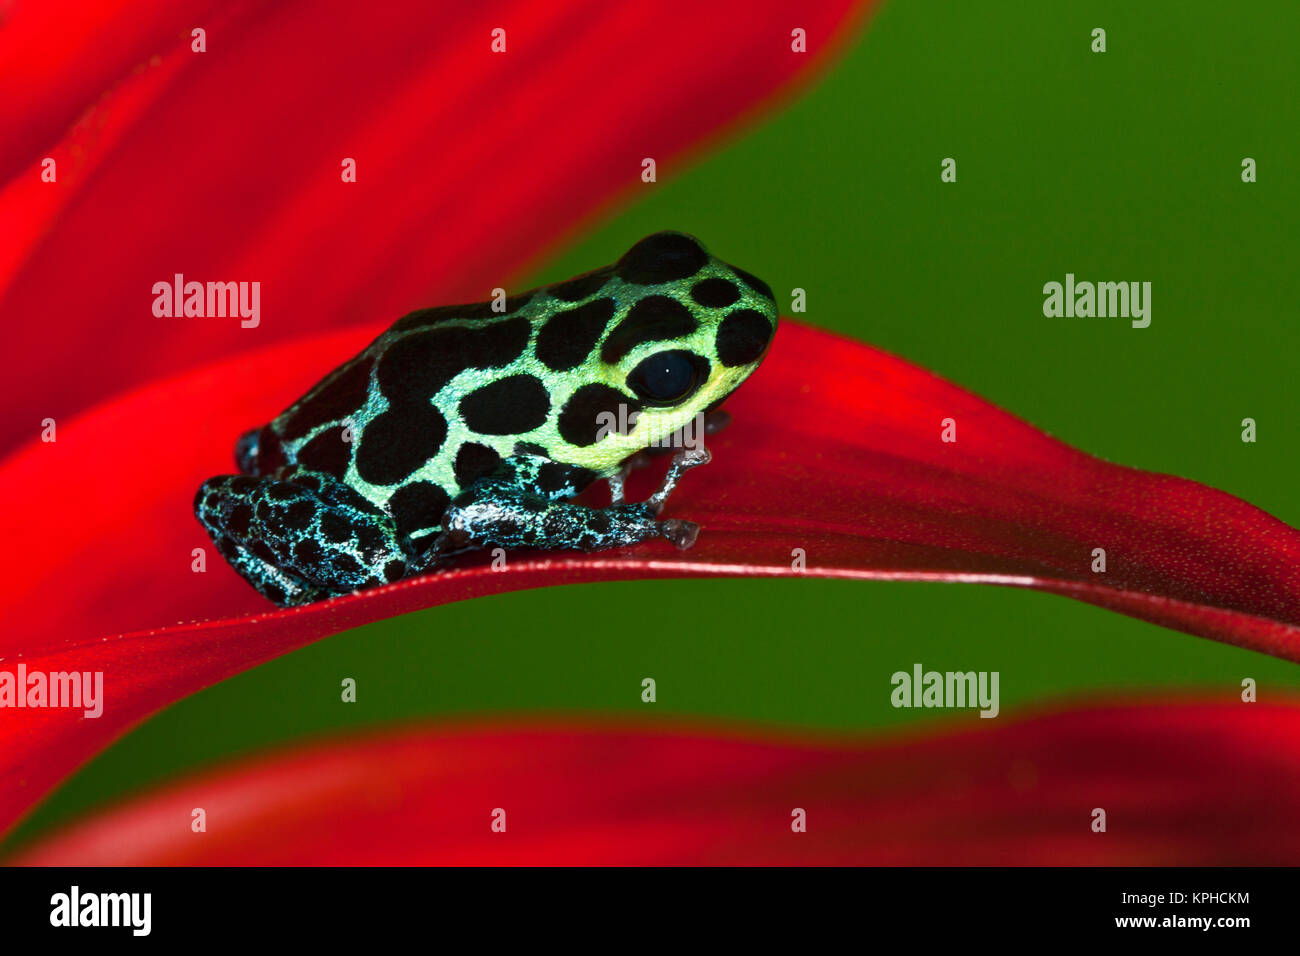 Imitator Poison-Dart Frog (Ranitomeya Imitator, formerly Dendrobates imitator) Stock Photo